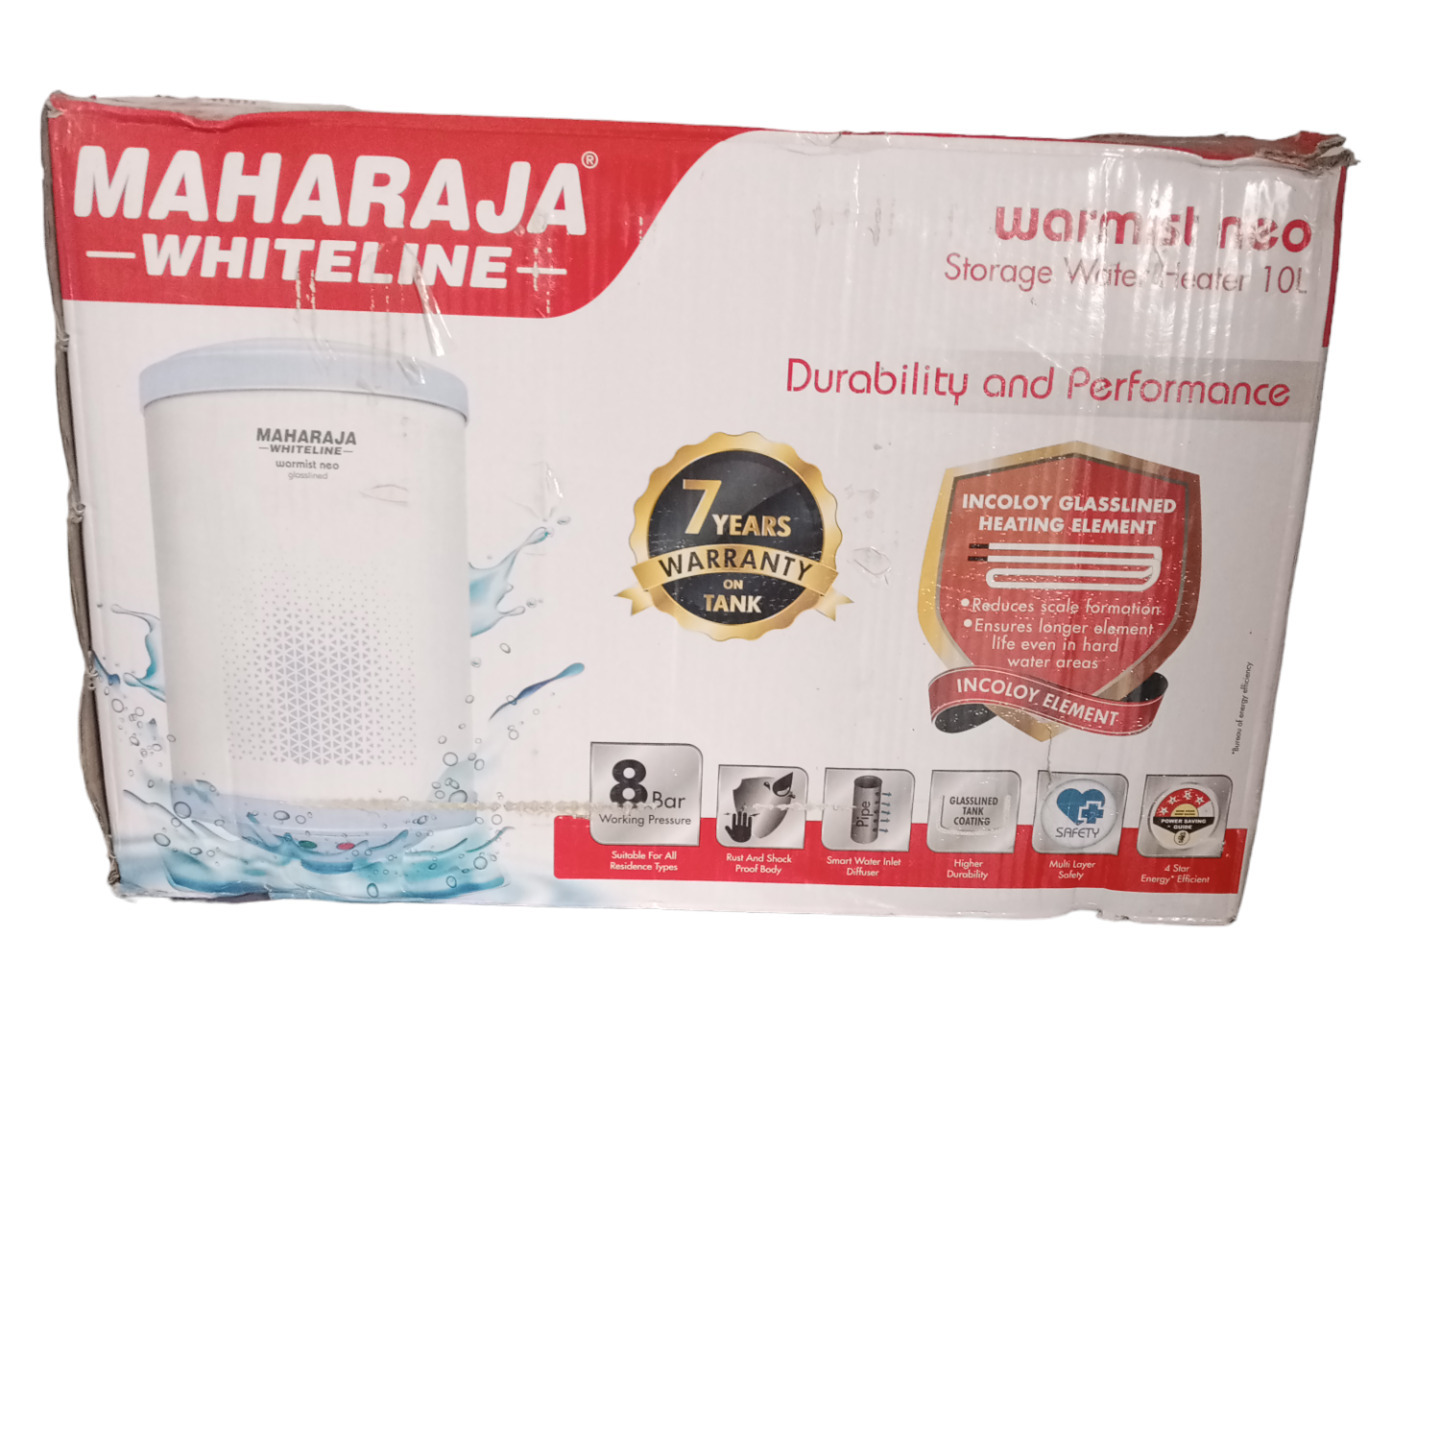 Geyser Storage Water Heater Maharaja Whiteline 10 Litres